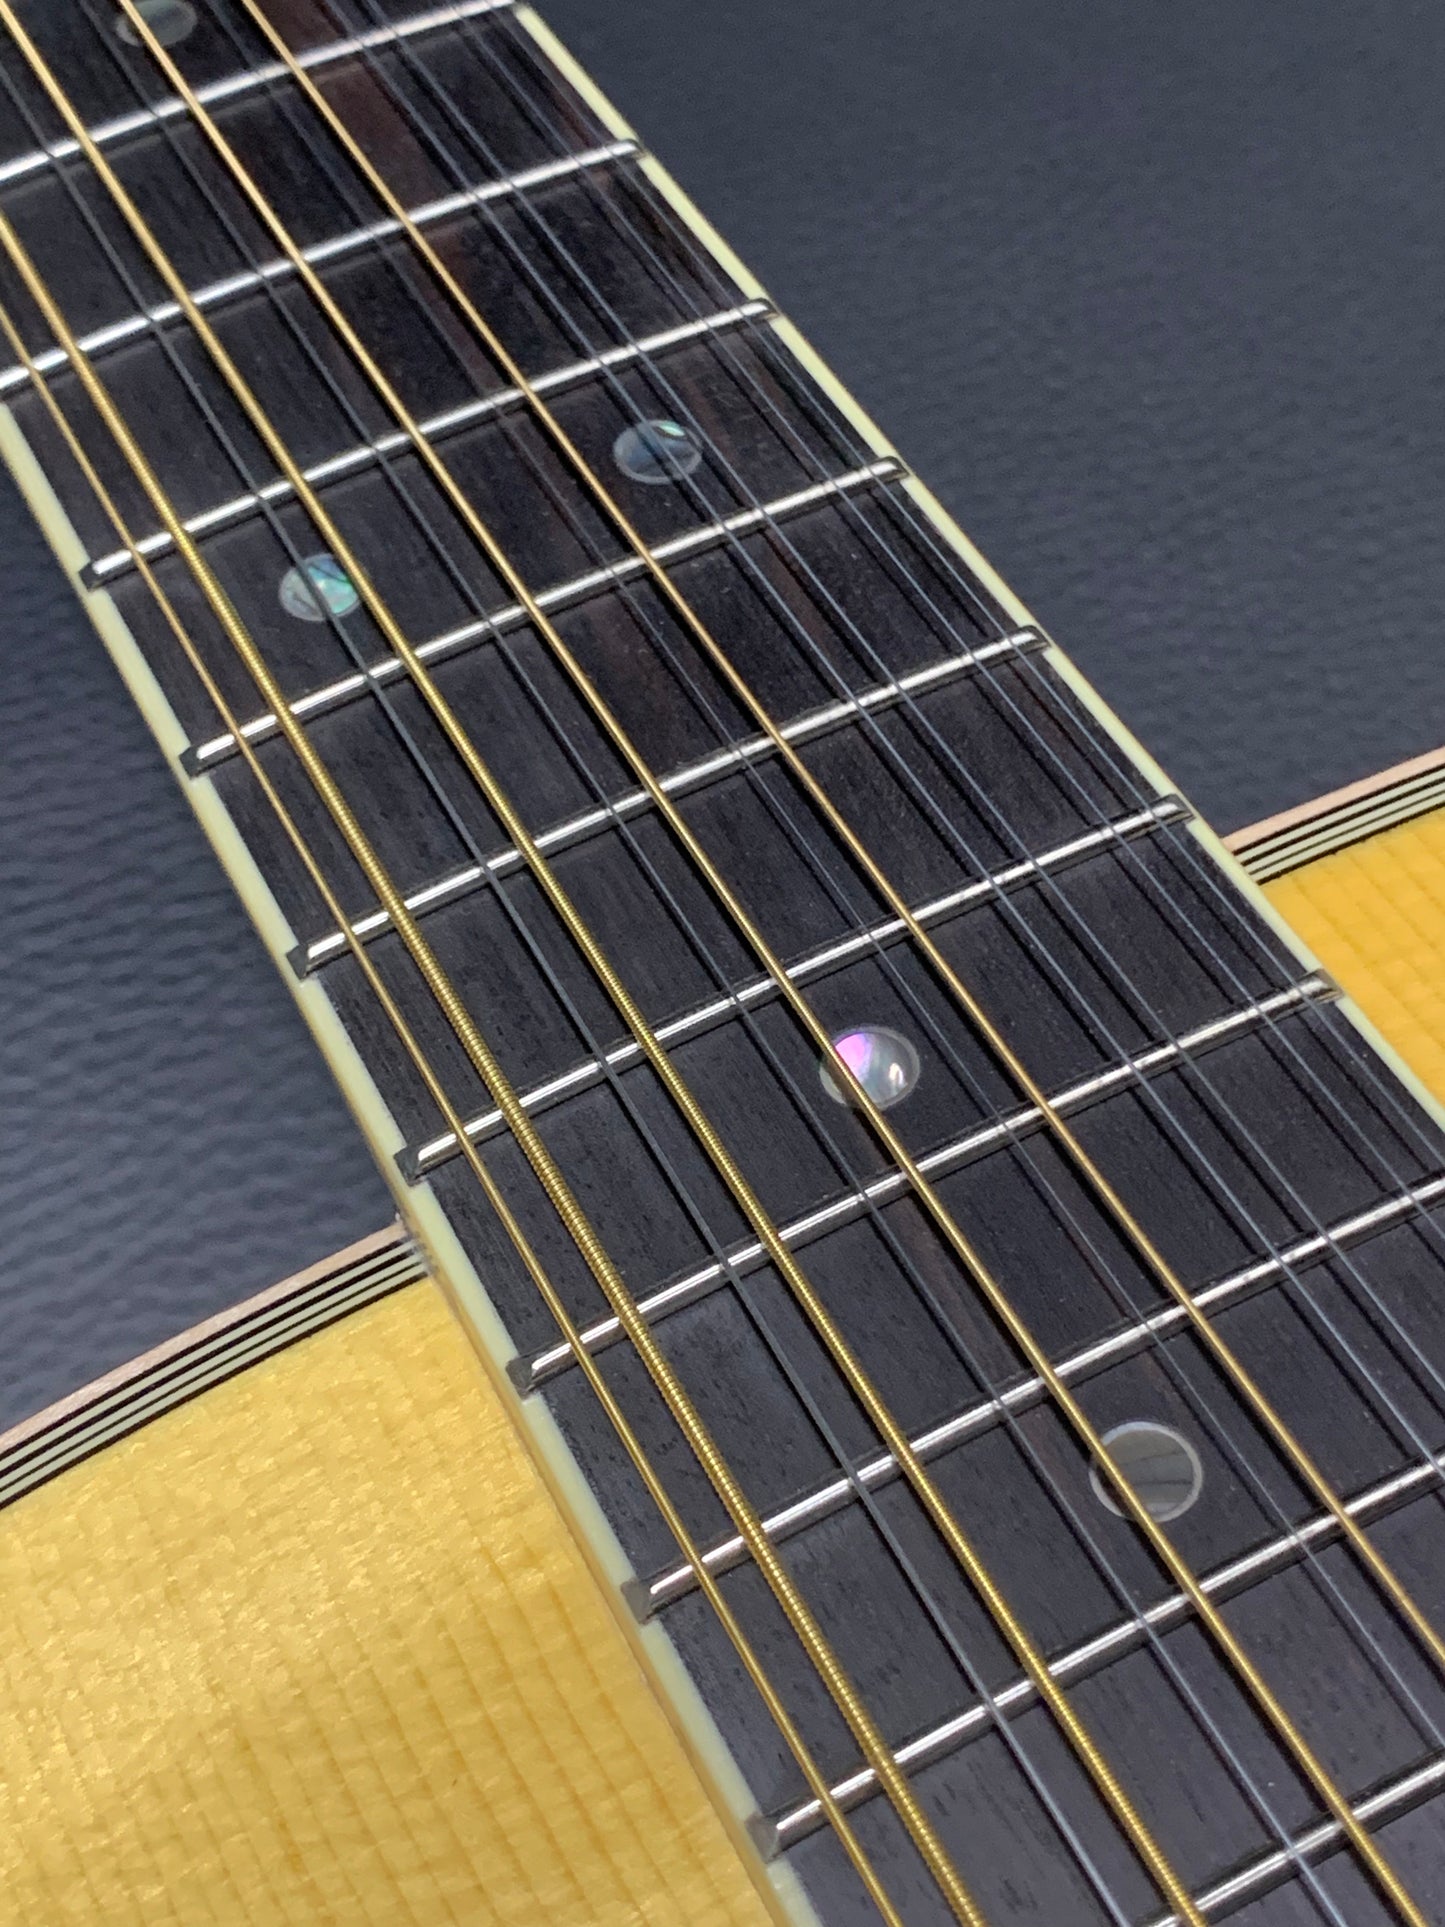 Yamaha LL16-12 12-String Acoustic-Electric Guitar w/ Hard Bag